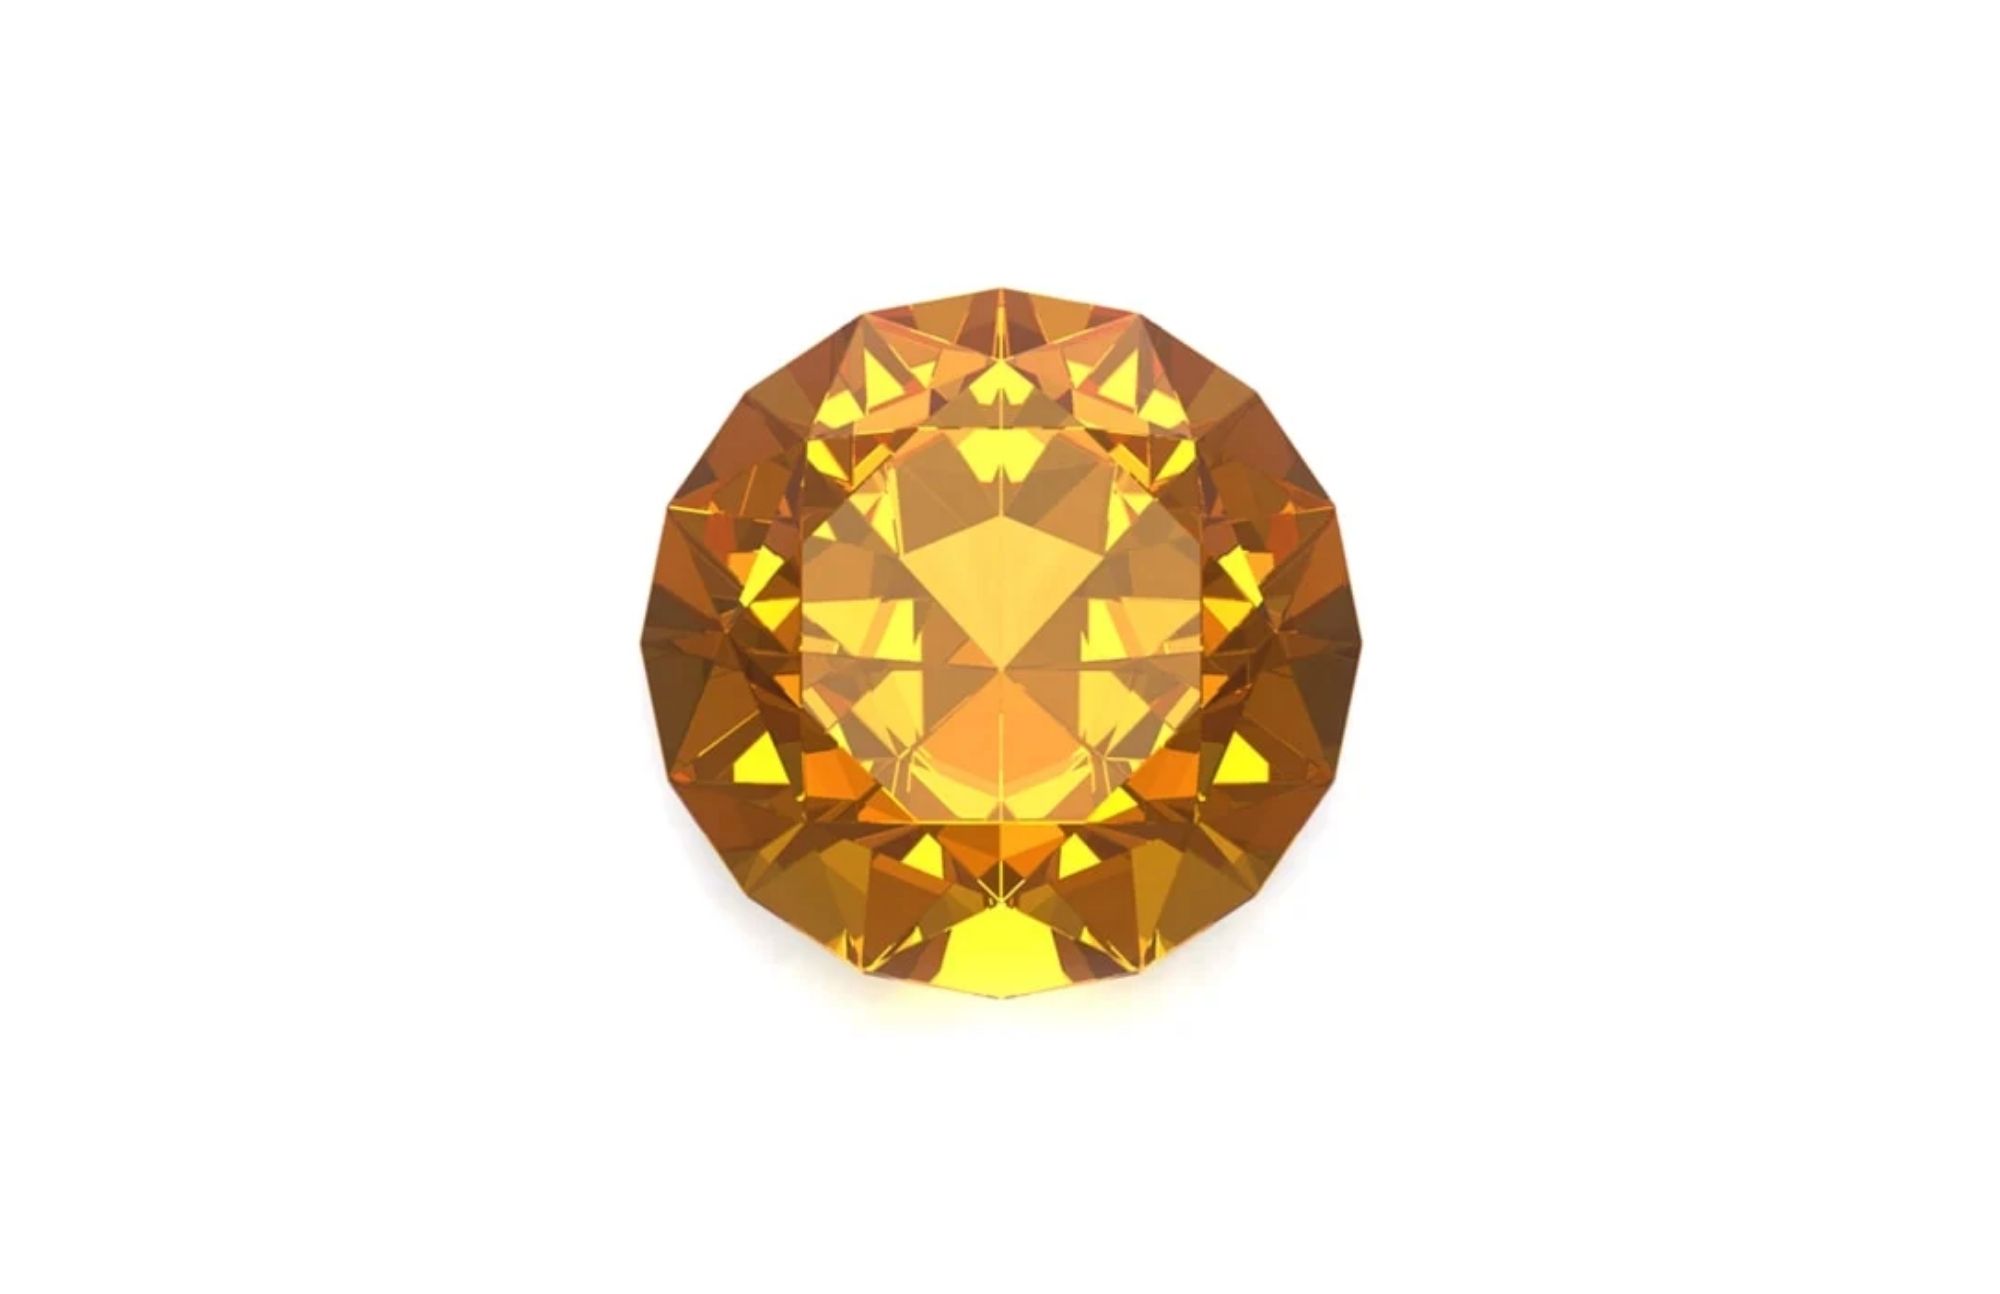 Goldish-yellow Topaz gem on a white background